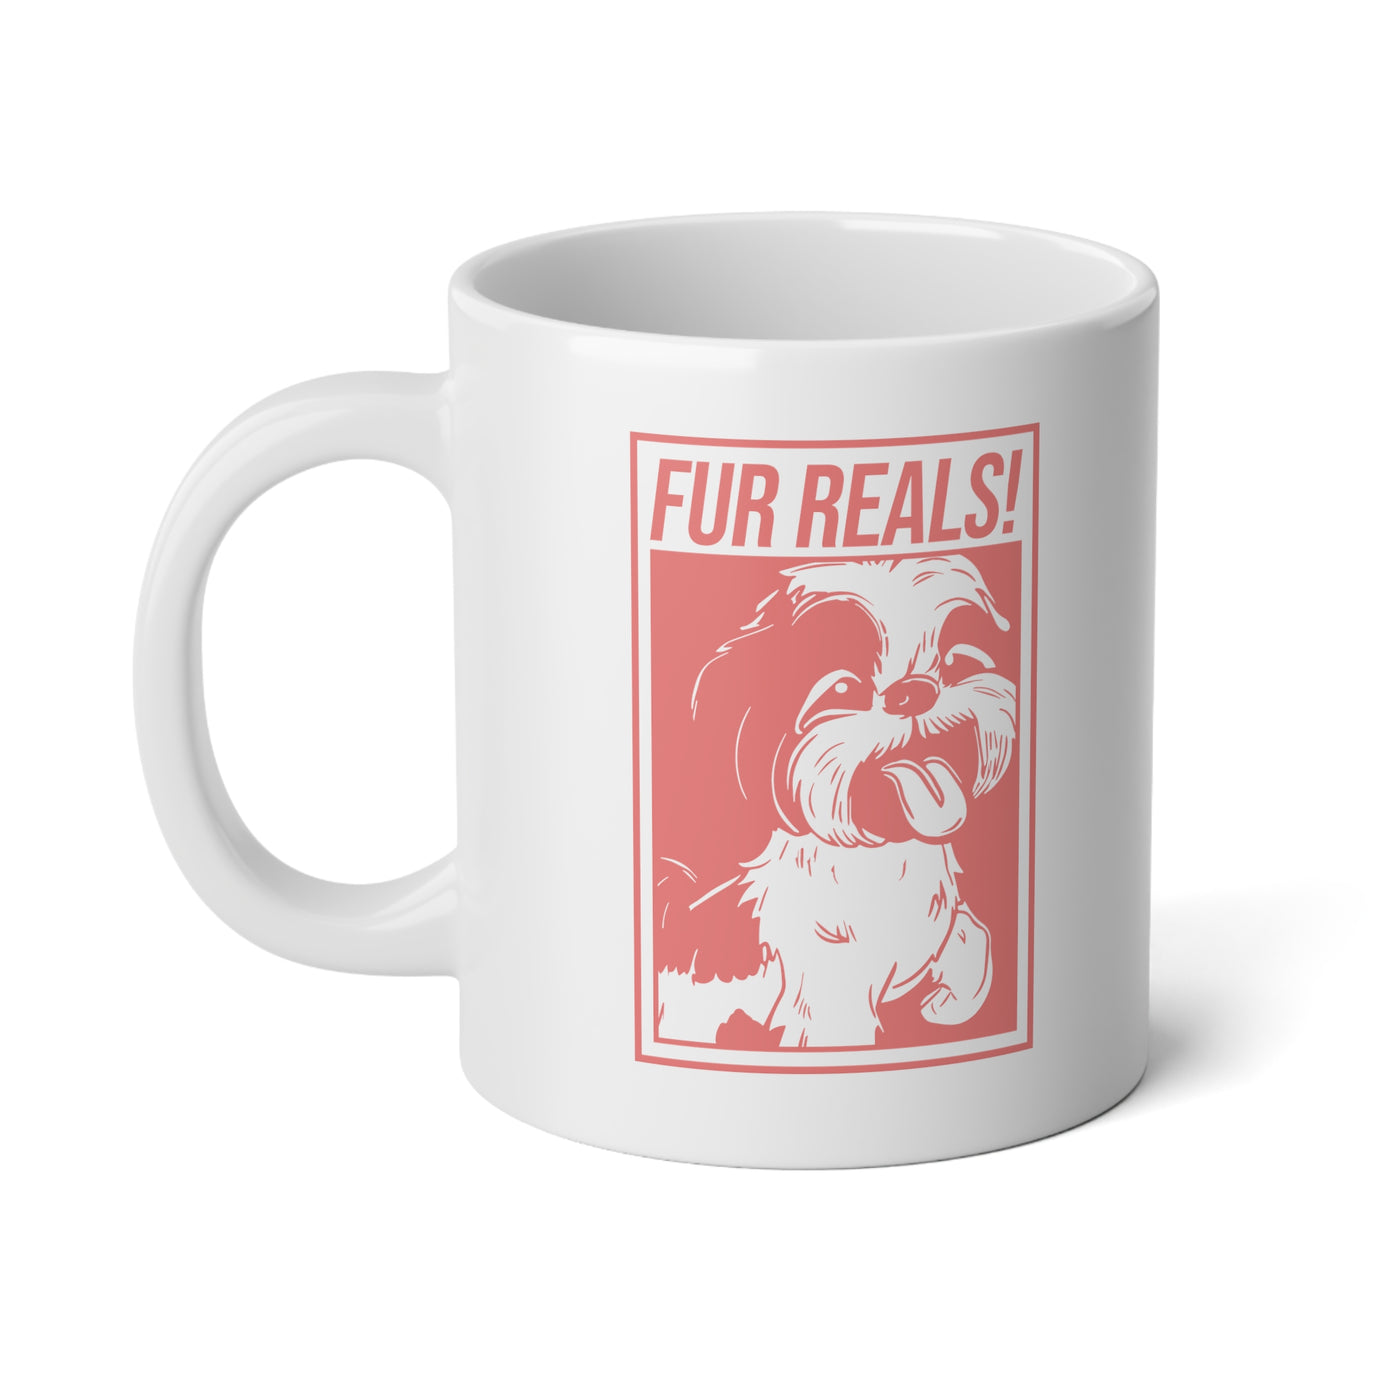 Fur Real Shih Tzu Mug